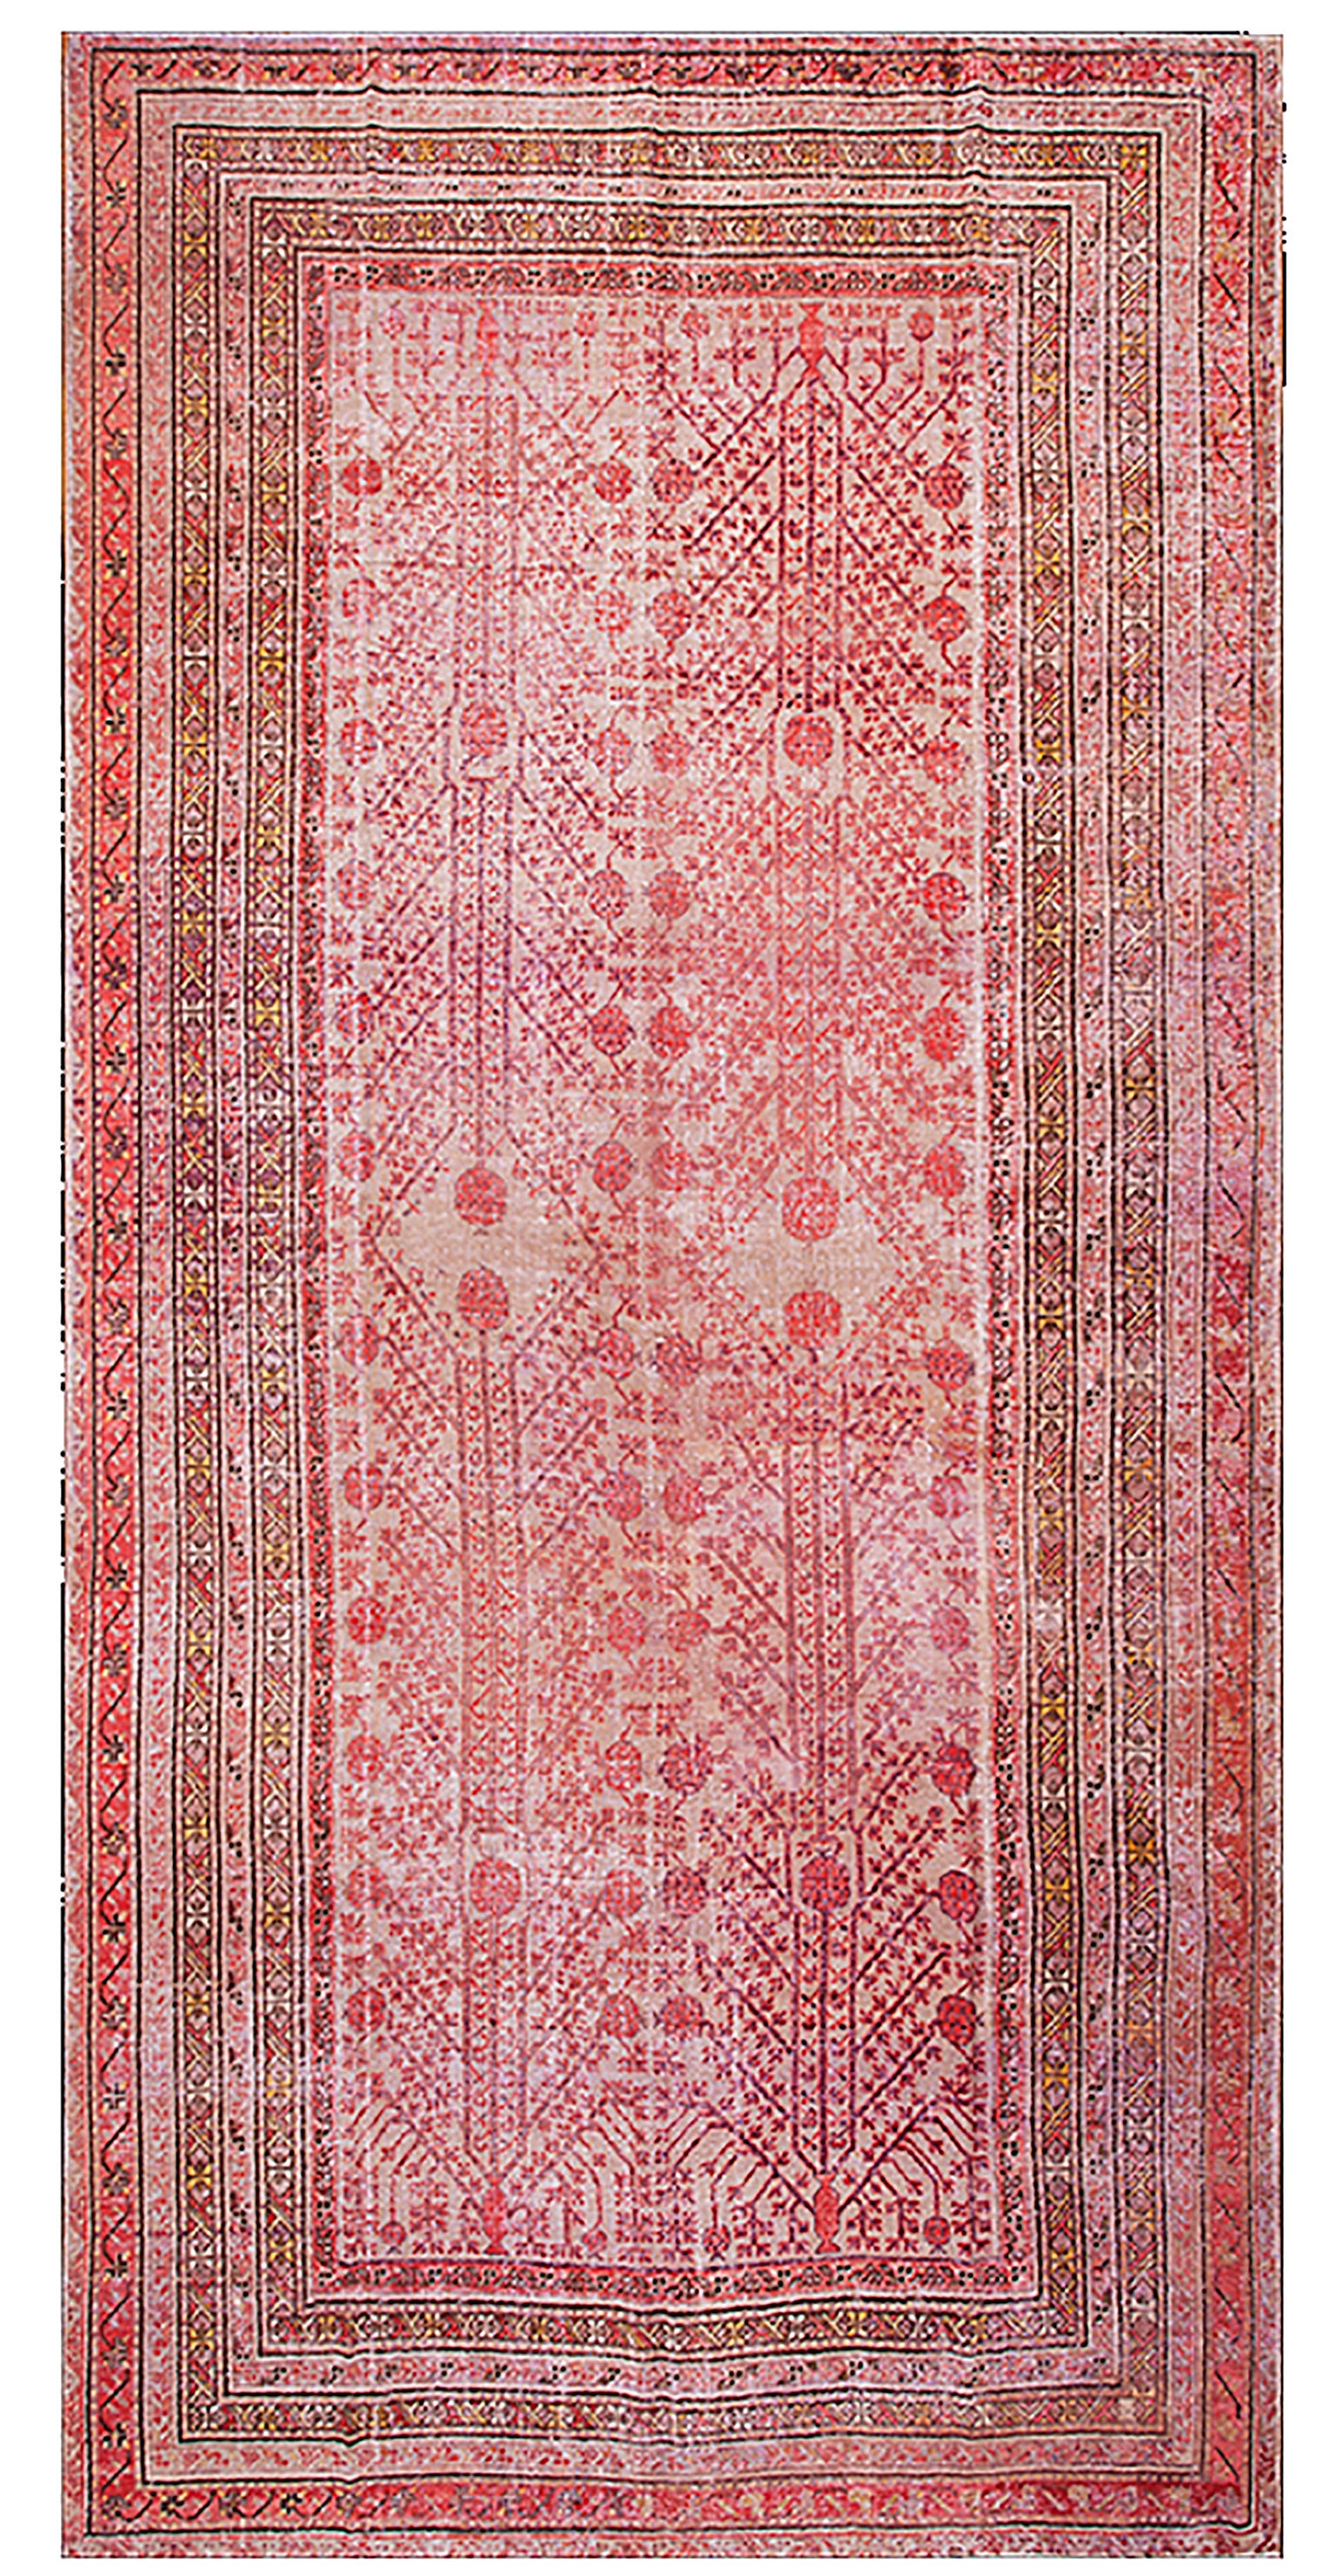 Early 20th Century Central Asian Khotan Carpet ( 8'8" x 18'4" - 265 x 558 )